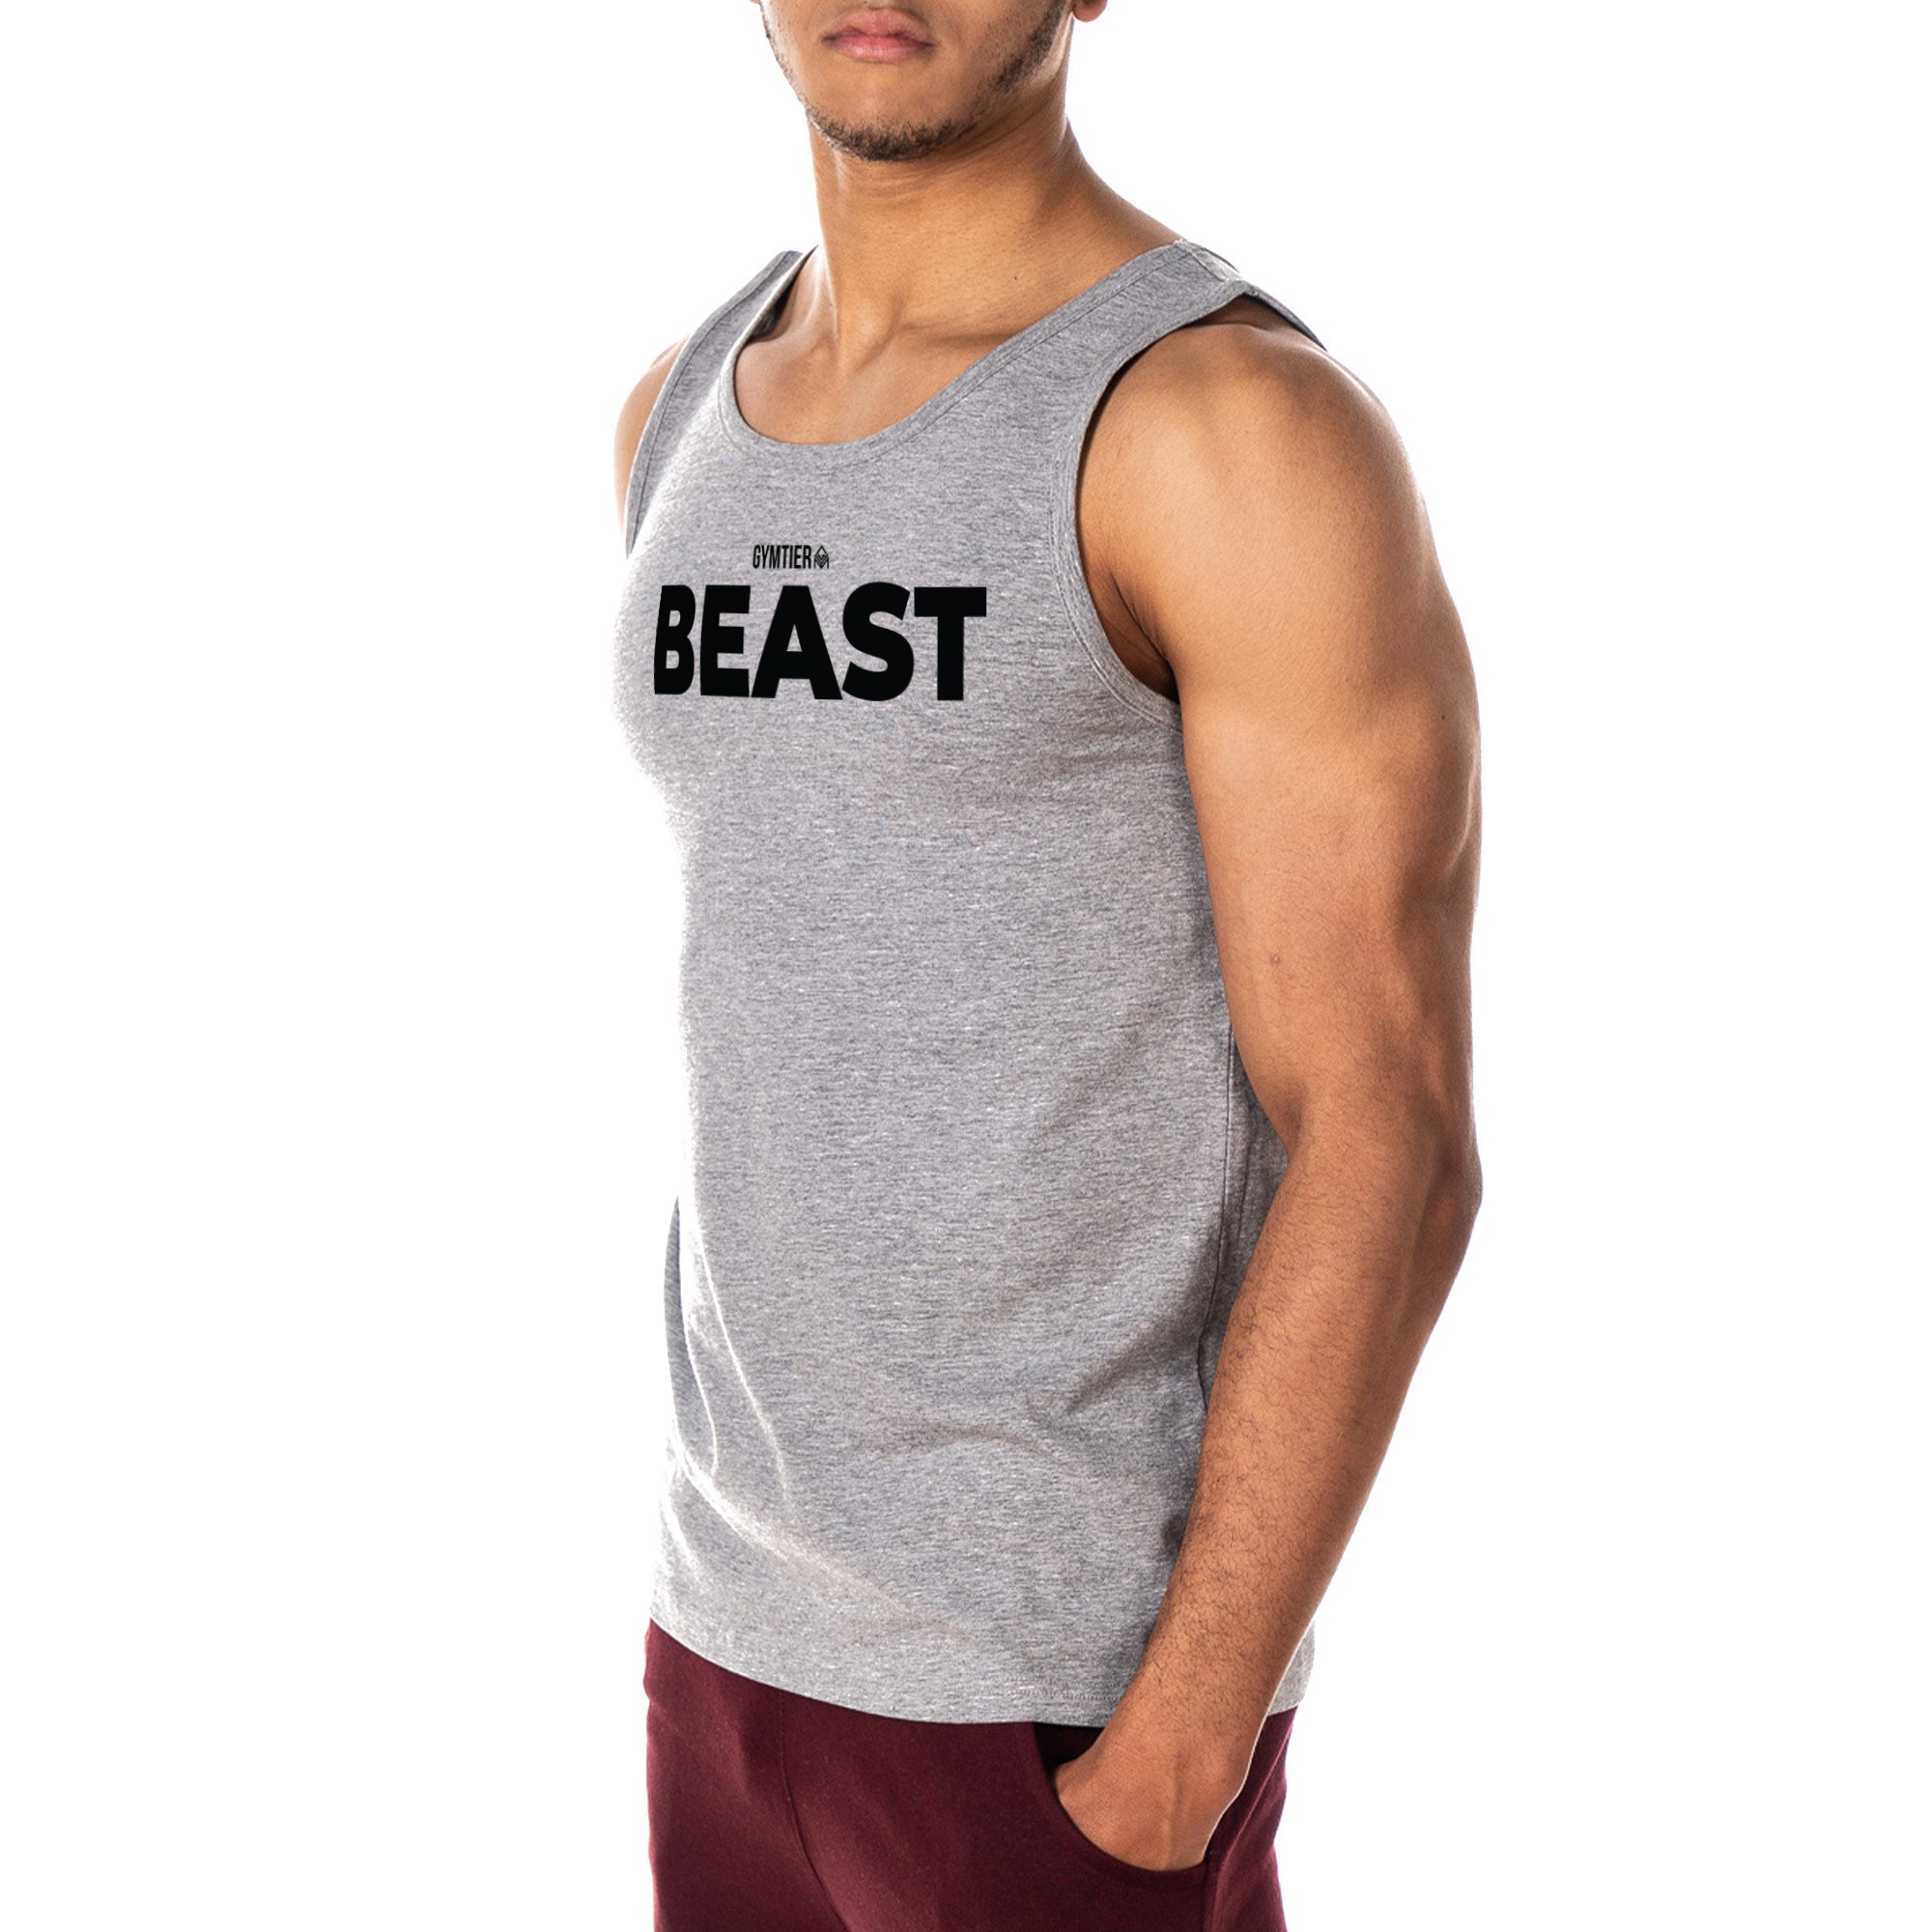 GYMTIER Beast Gym Vest